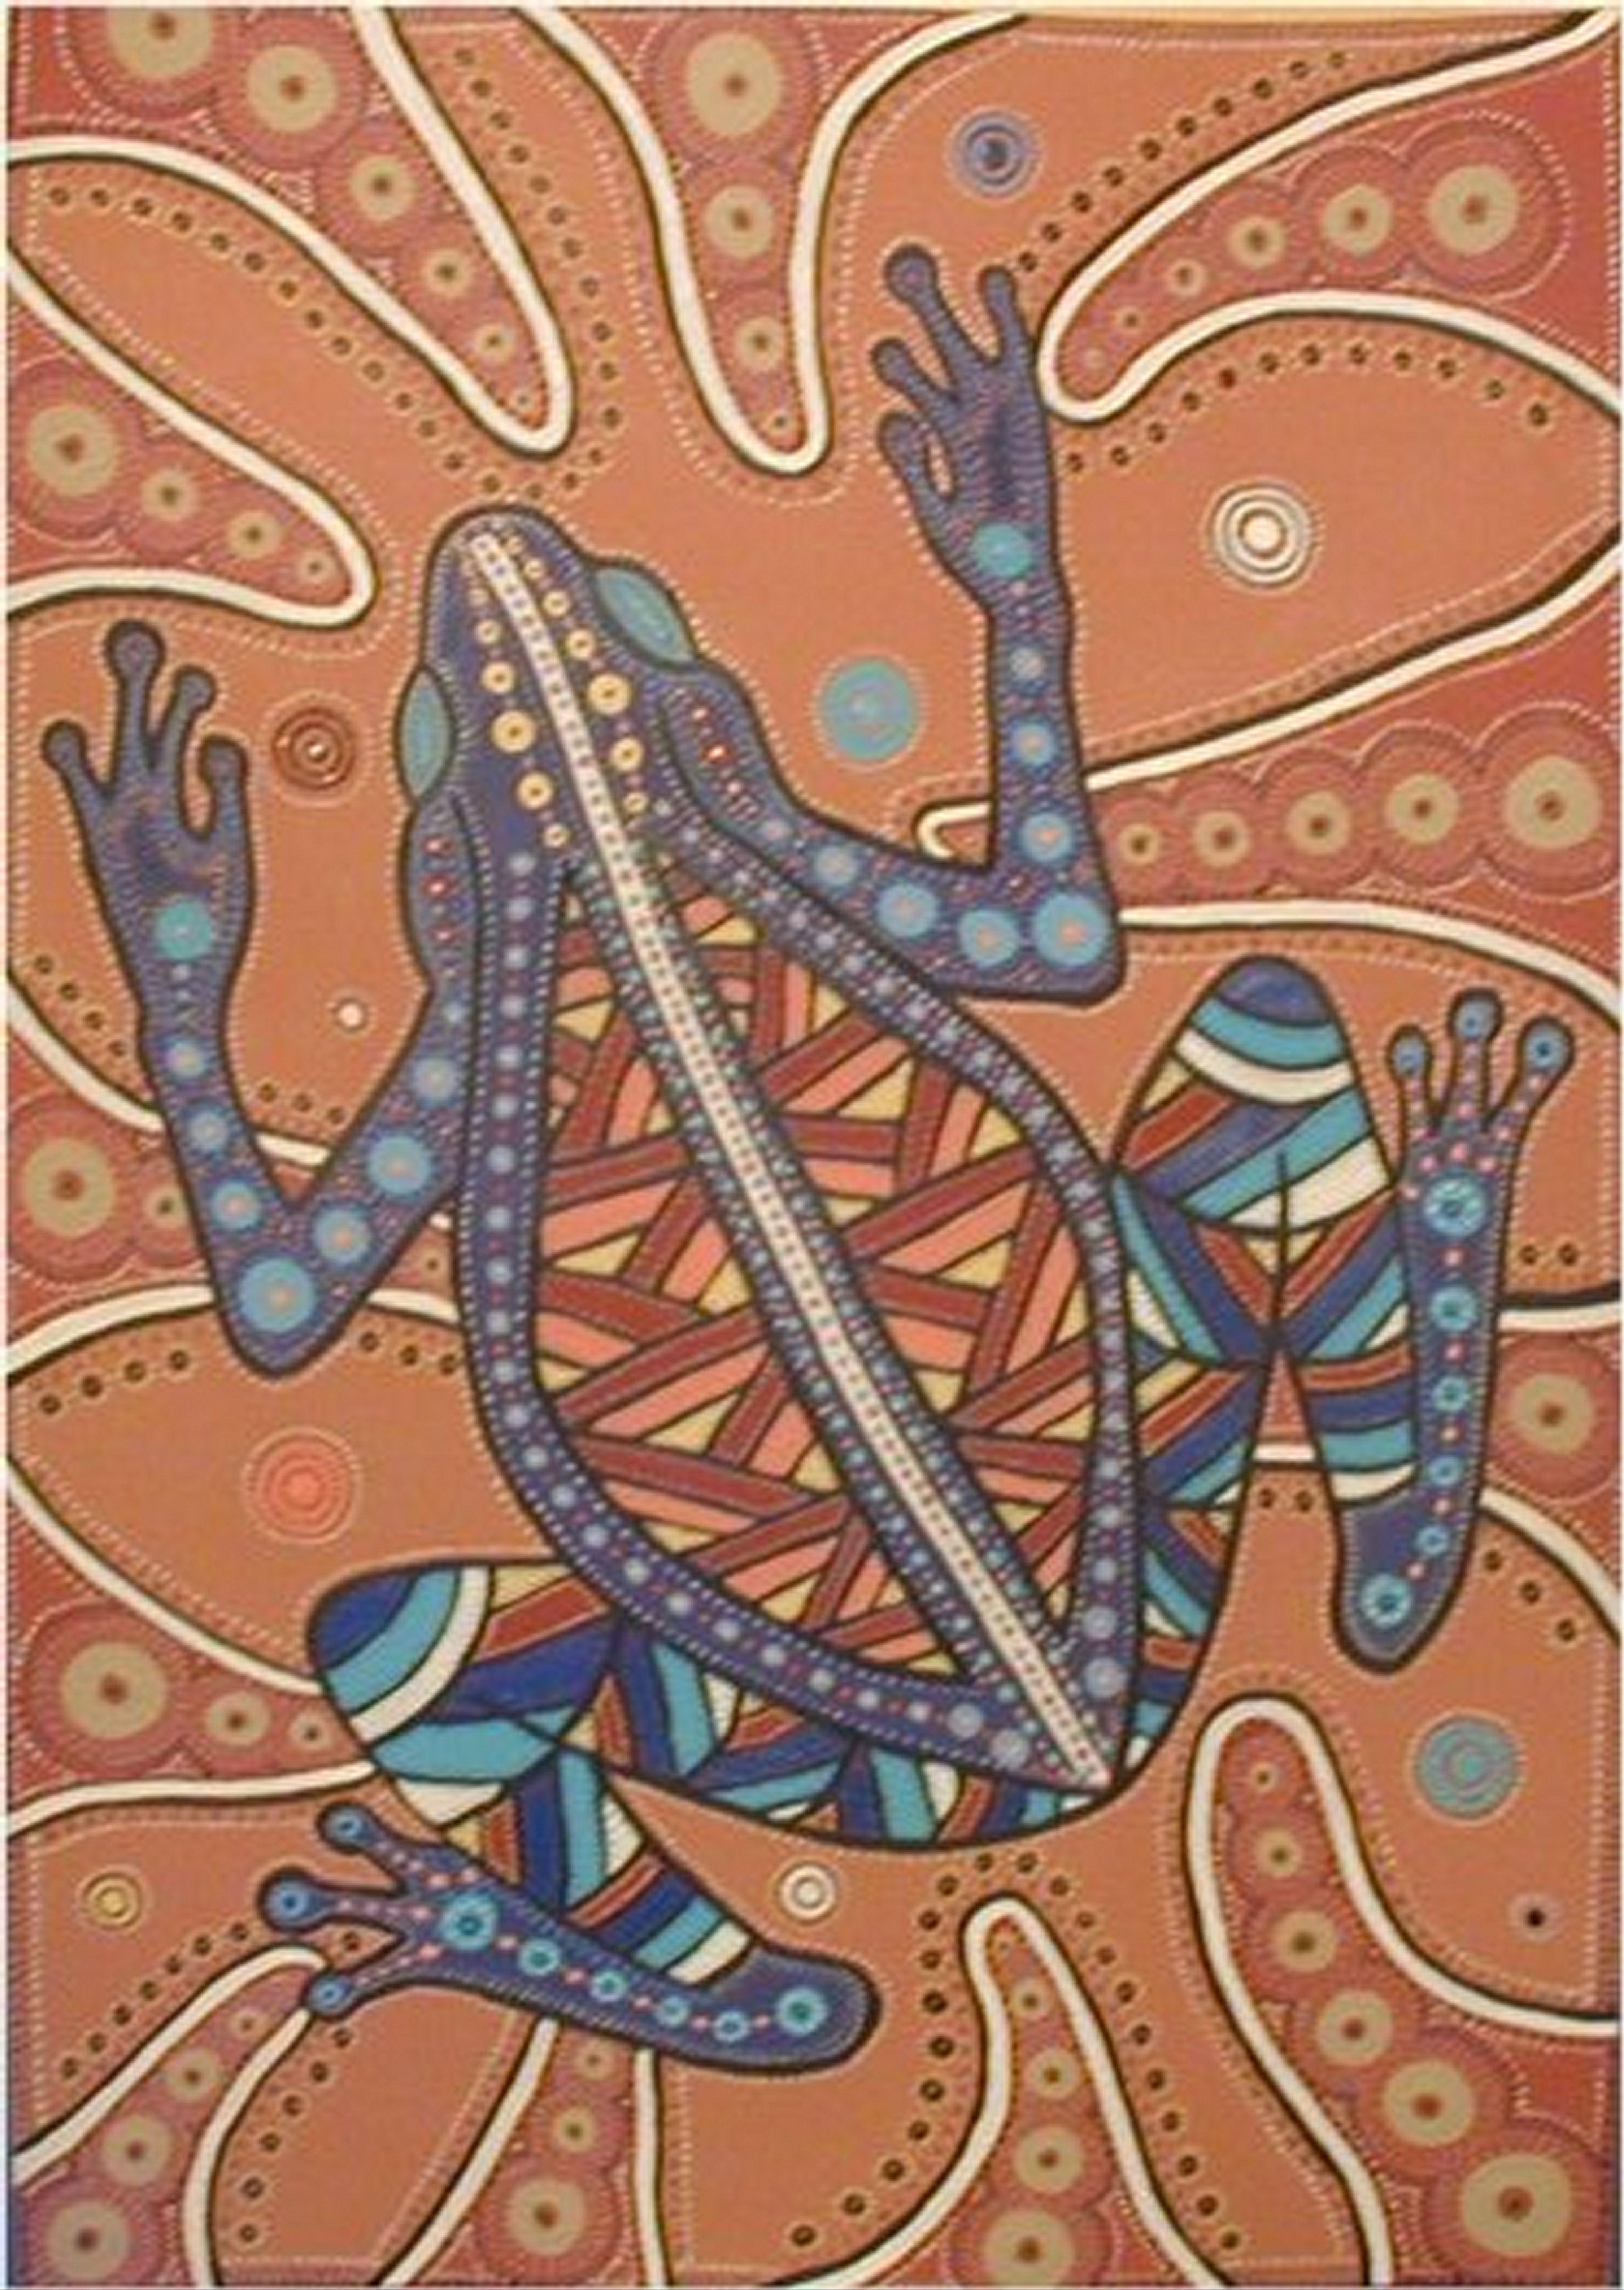 Aboriginal Art Wallpapers - Wallpaper Cave